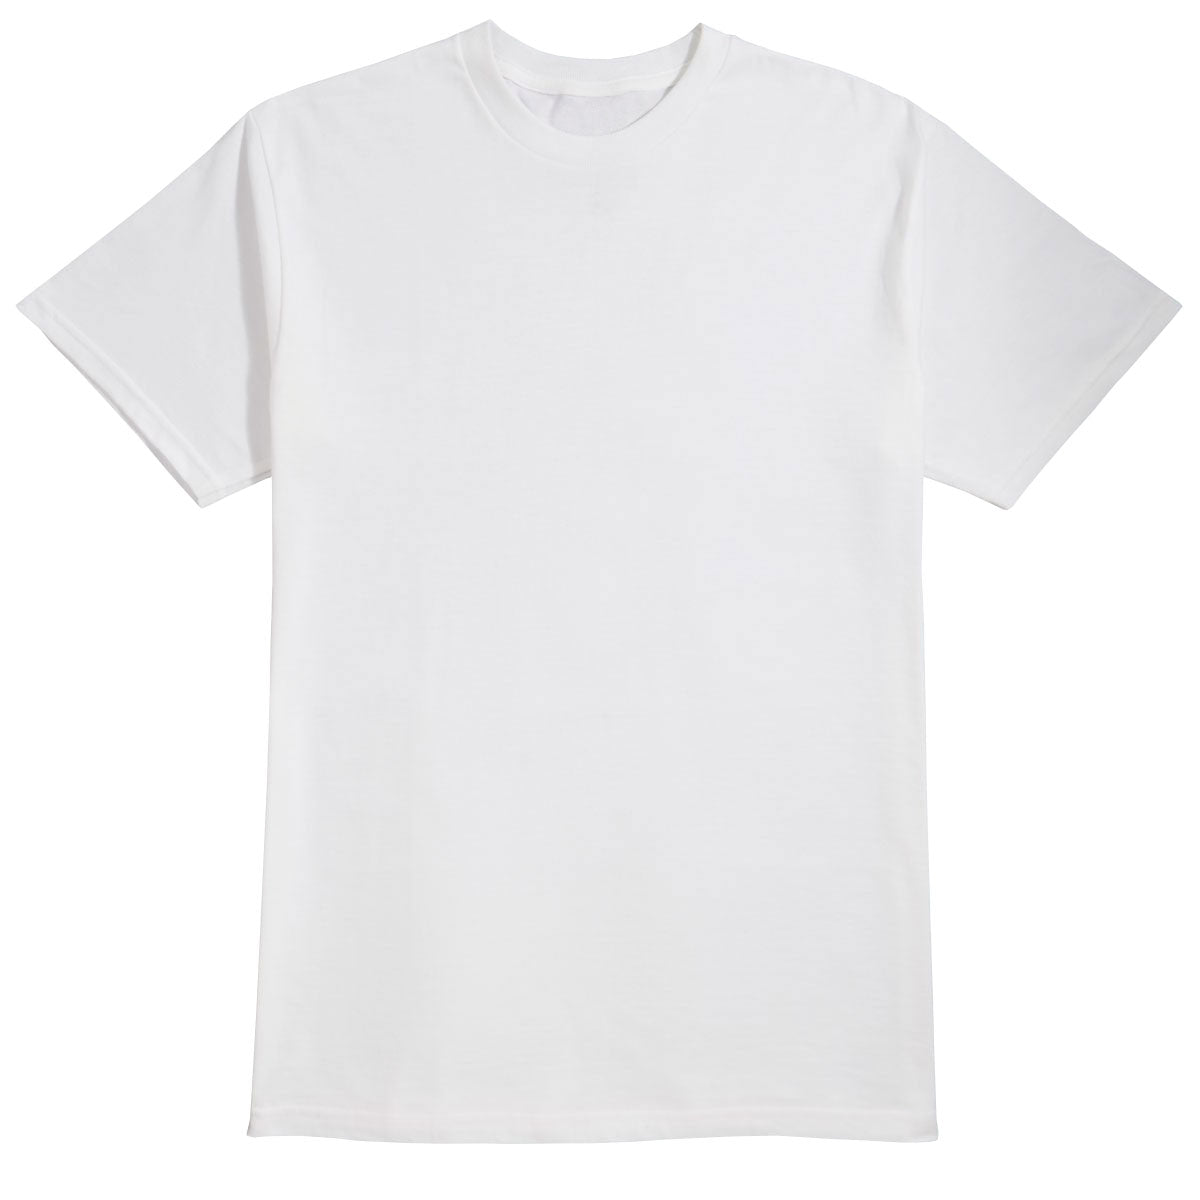 Converse Spider Web T-Shirt - White - XXL image 1